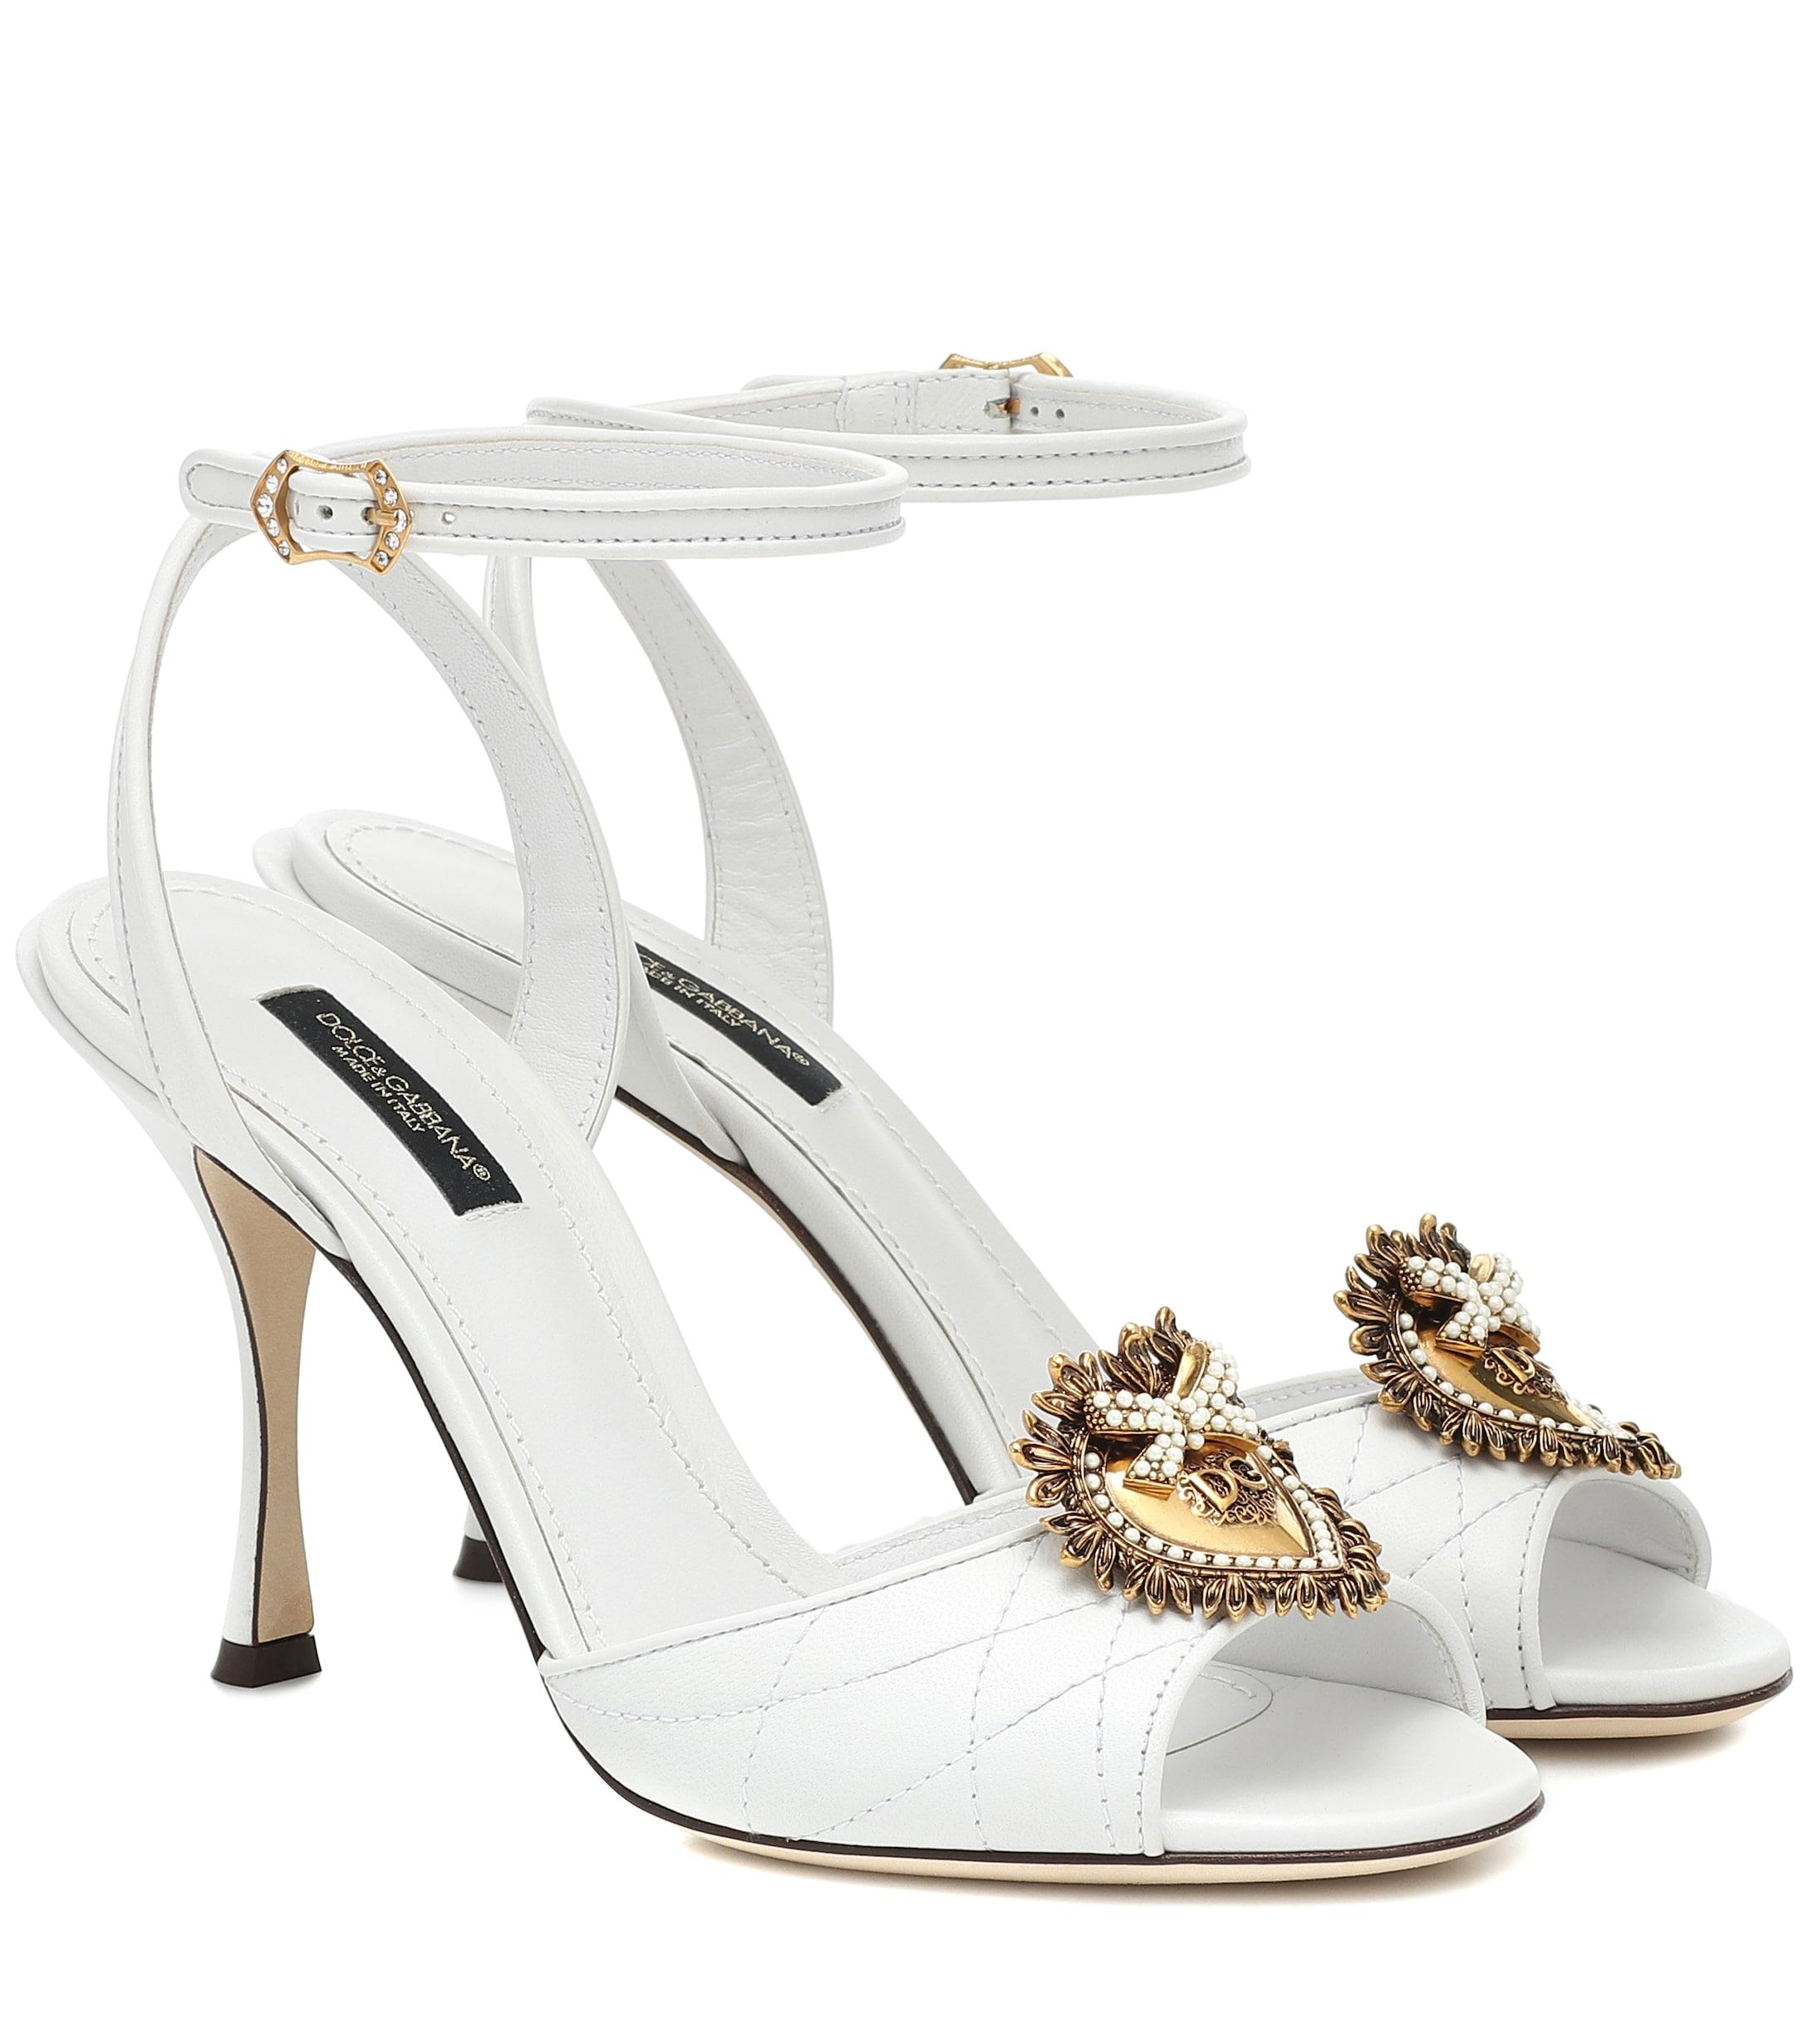 Dolce & Gabbana Devotion Matelassé Leather Sandals in White | Lyst